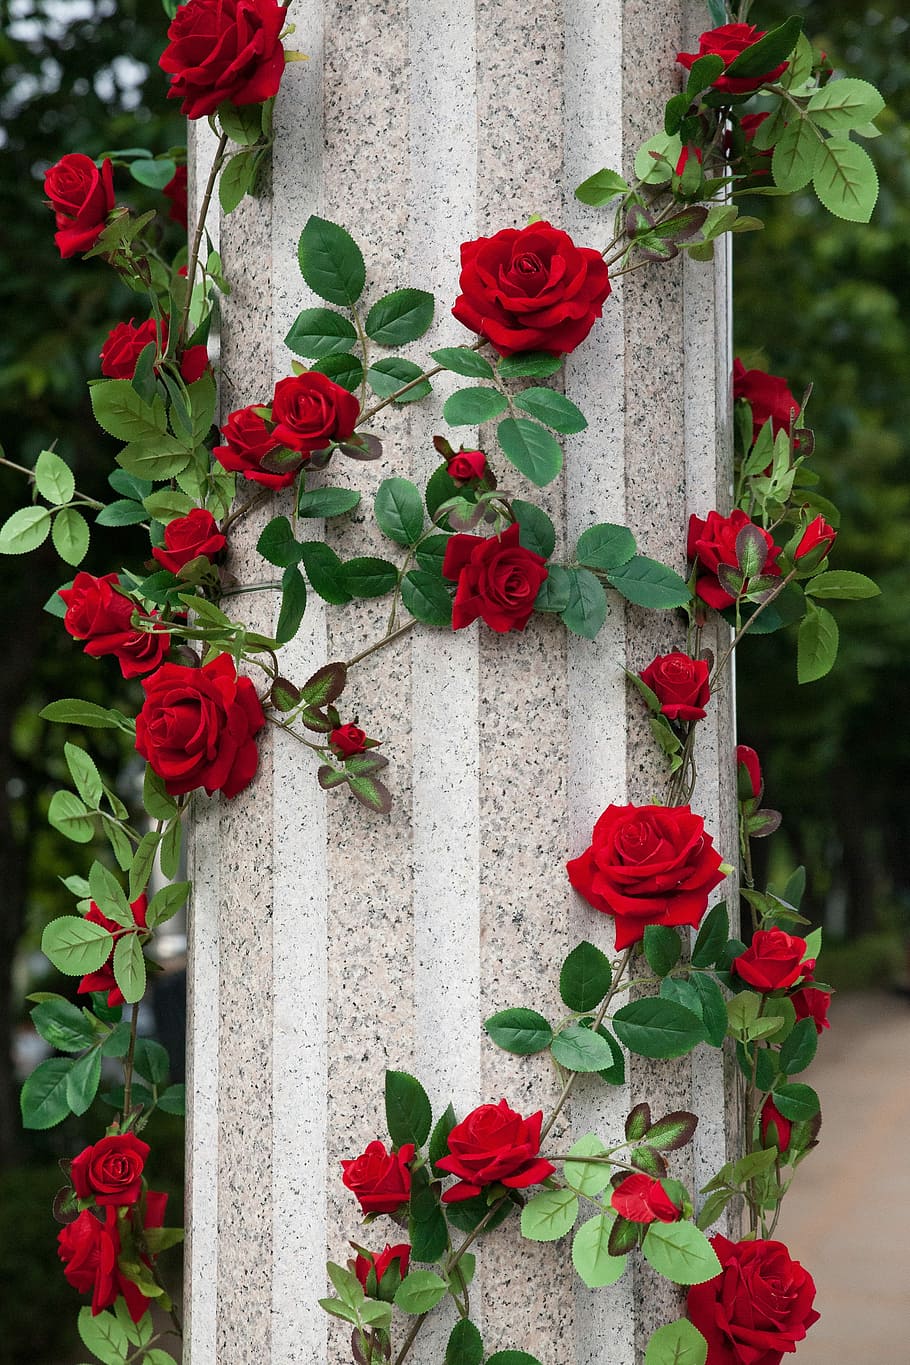 HD wallpaper: red roses around white concrete pillar, flowers, rose garden  | Wallpaper Flare